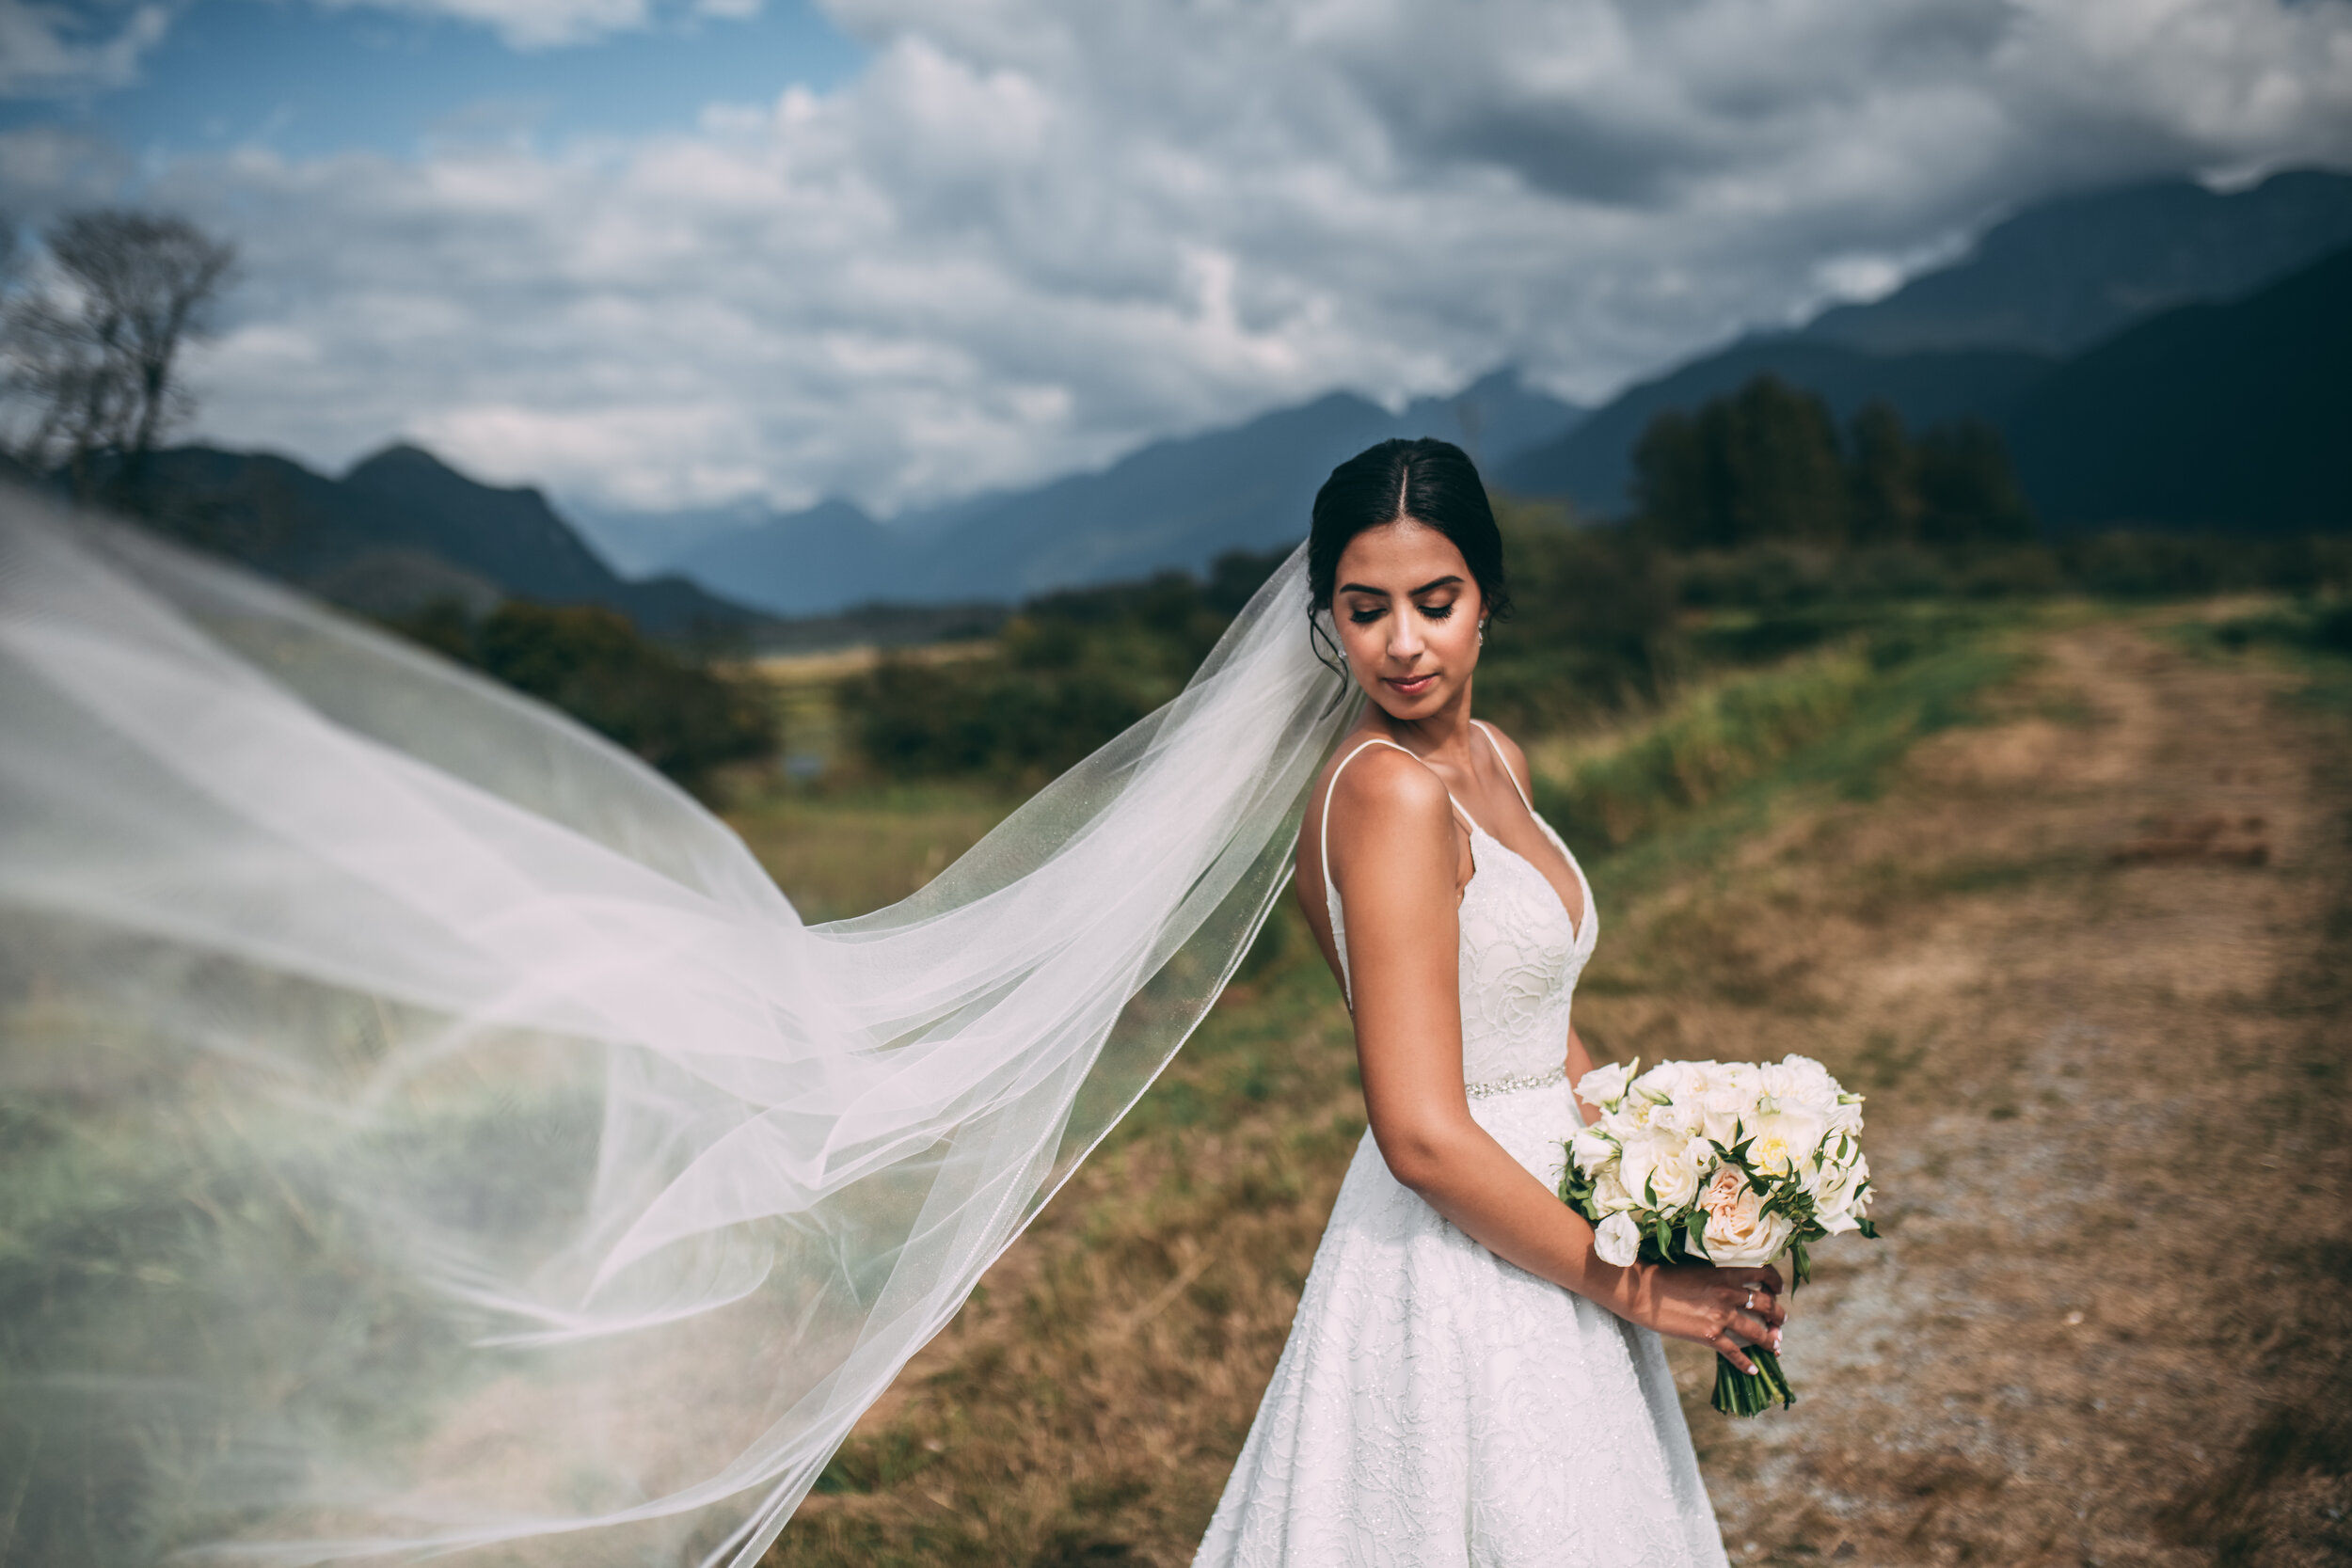 Natasha & Lee Sneak Peeks - August 31, 2019 Swaneset Wedding-1490.jpg